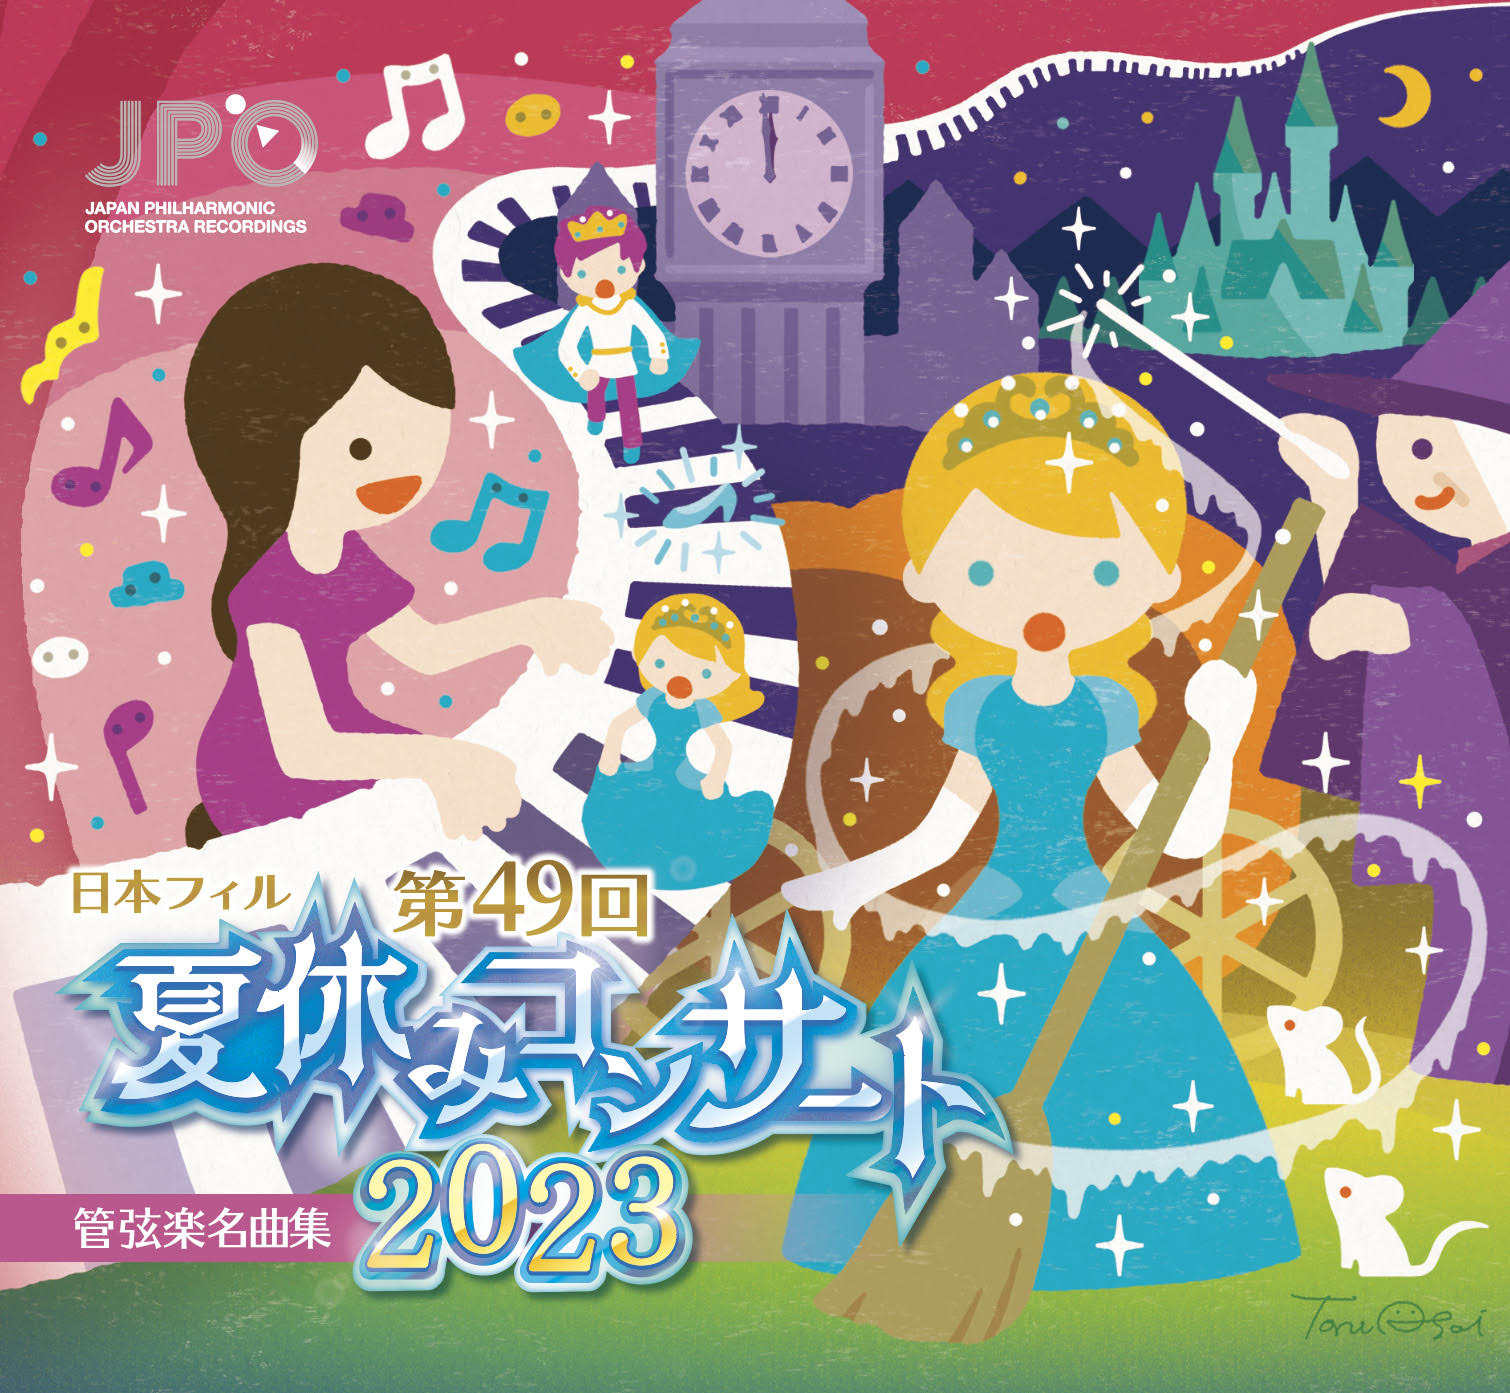 CD/DVD/JPO RECORDINGS | Japan Philharmonic Orchestra